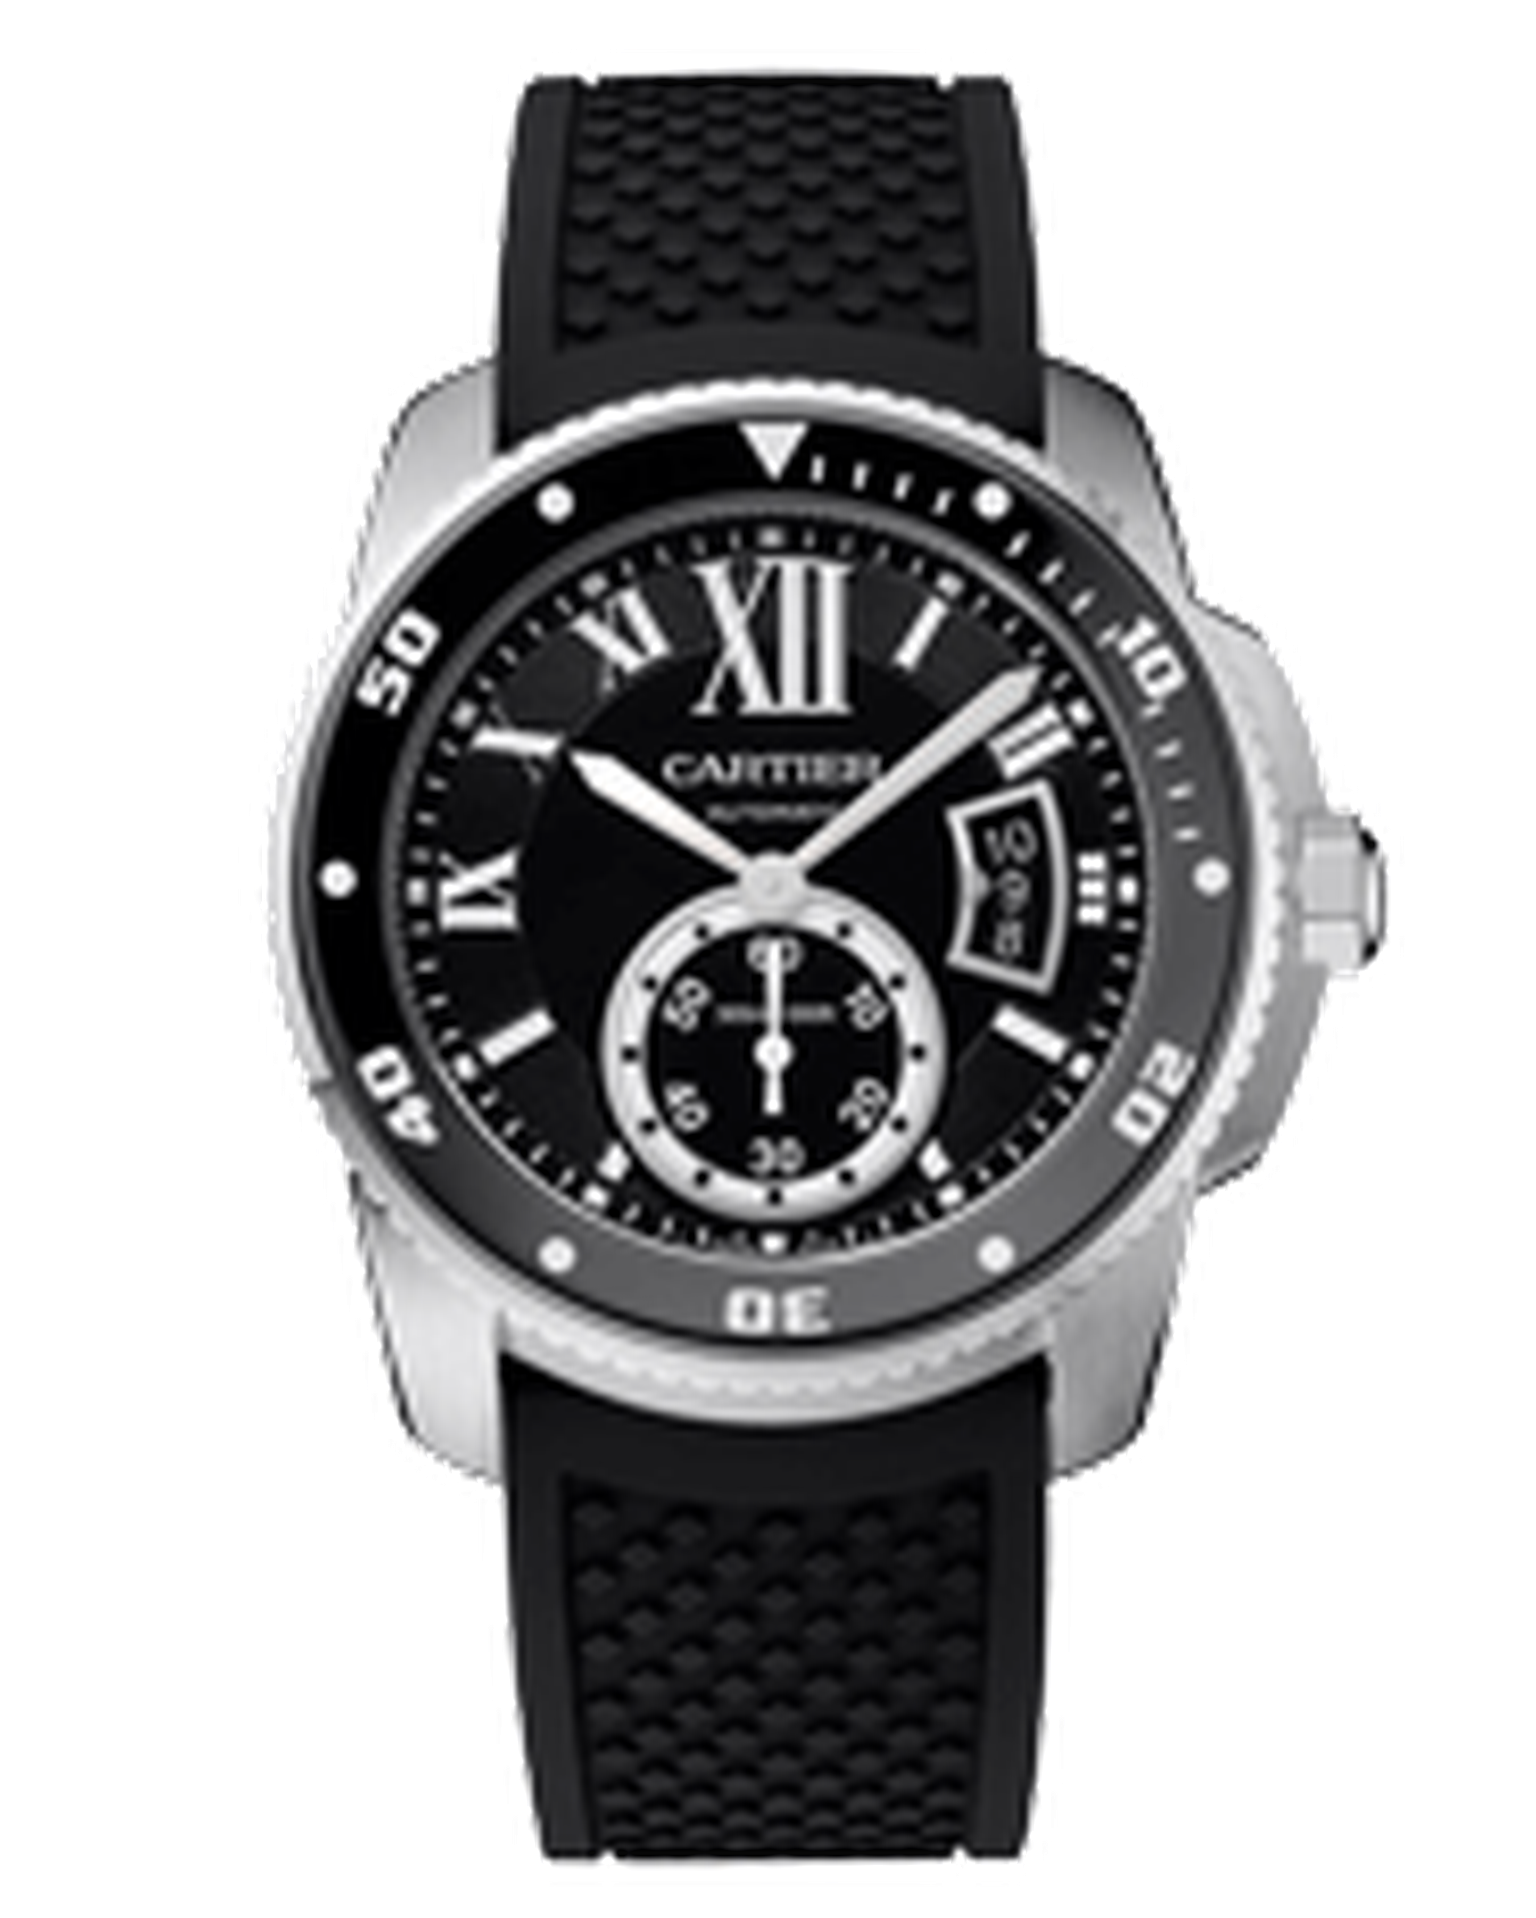 Calibre-de-Cartier-Steel-Dive-Watch-Thumb